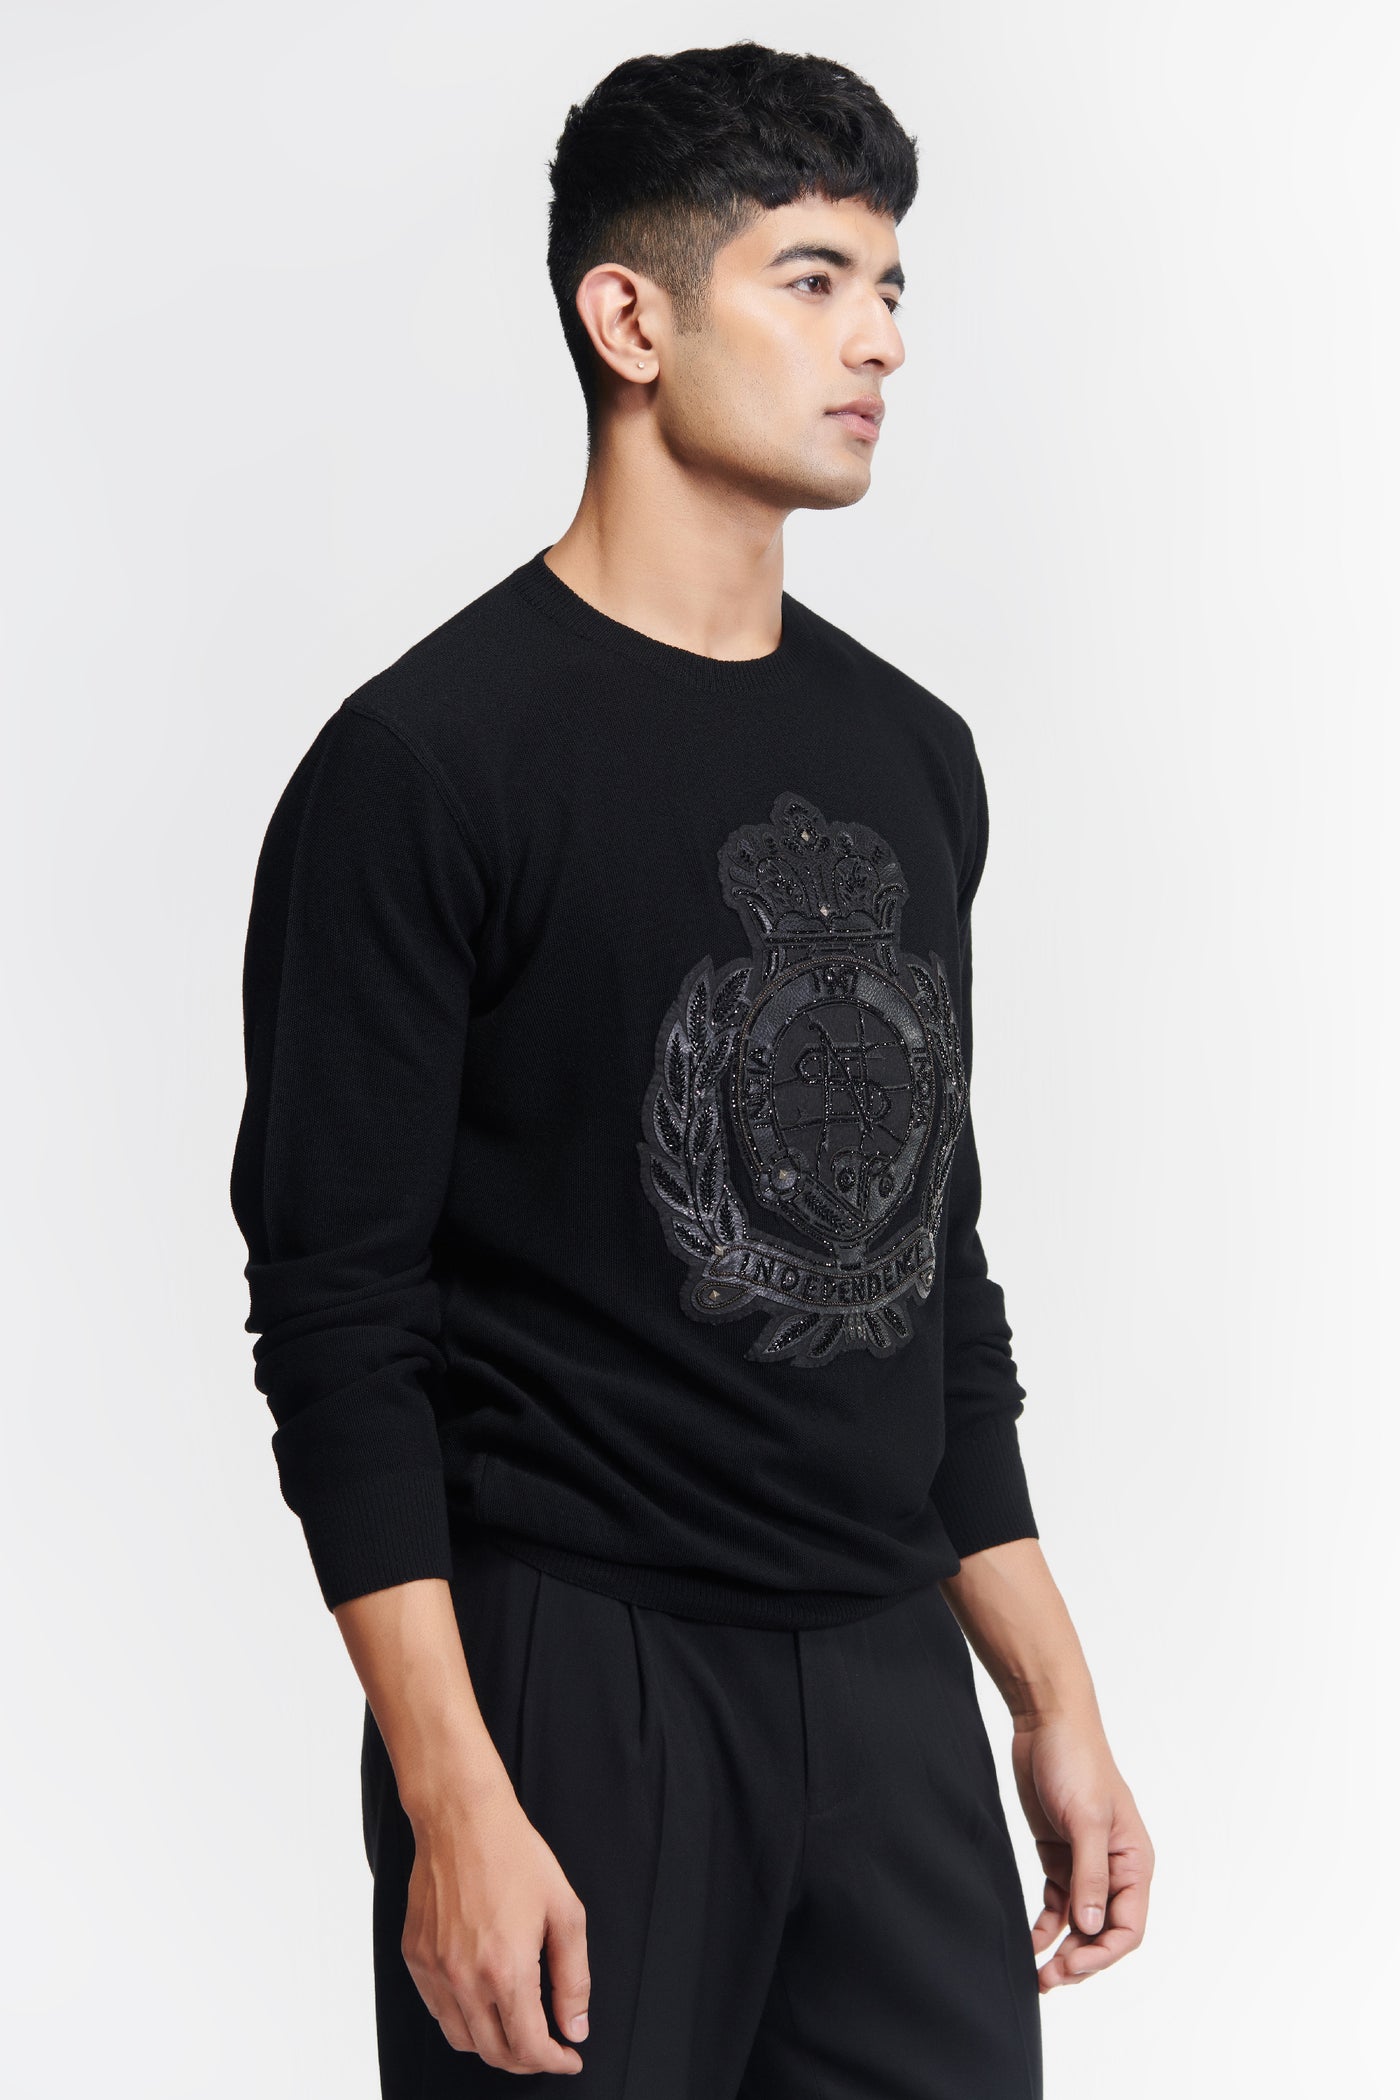 Shantanu & Nikhil Menswear Black Crested Sweaters indian designer wear online shopping melange singapore